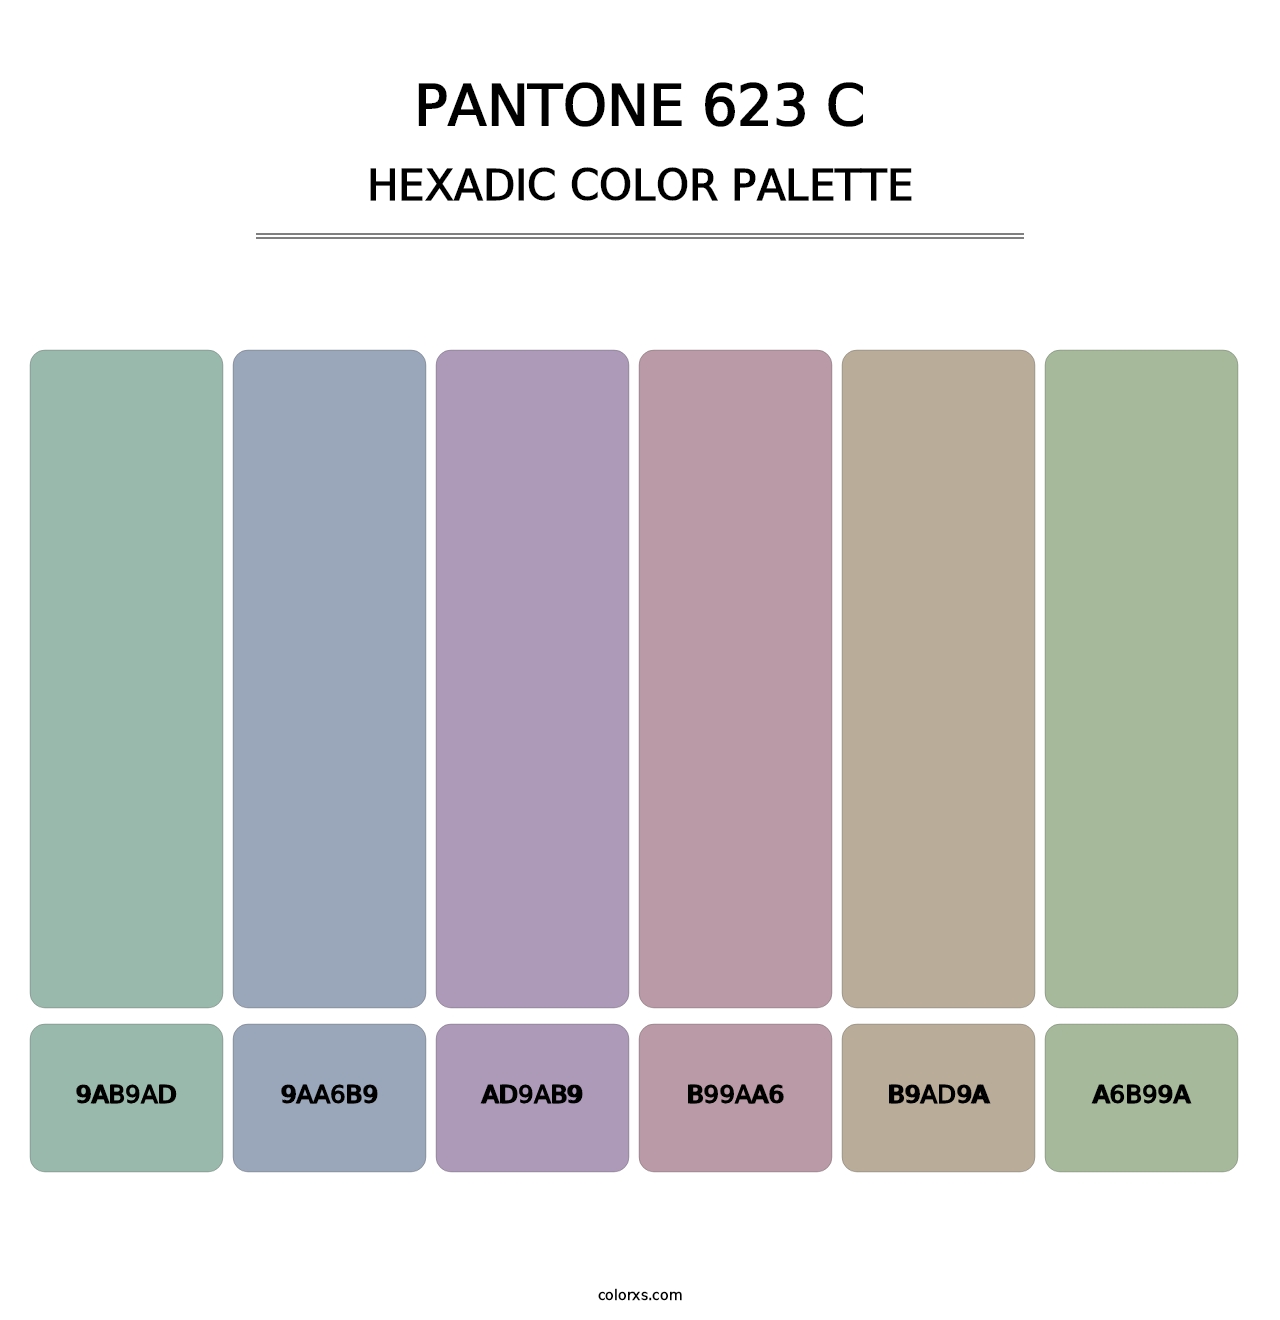 PANTONE 623 C - Hexadic Color Palette